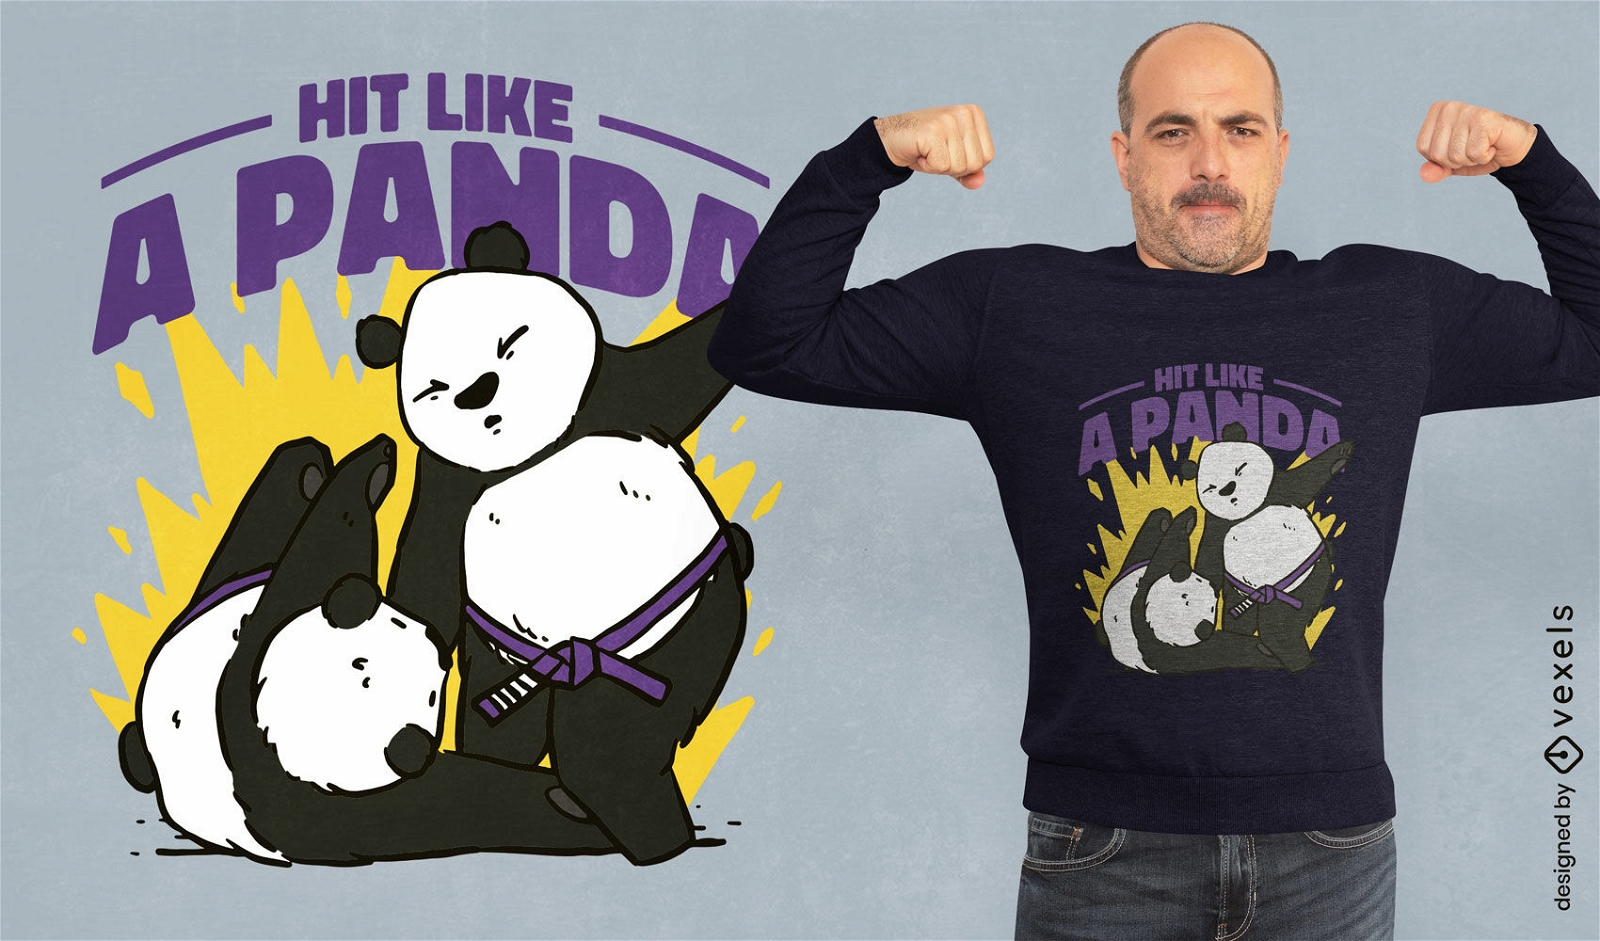 Panda-B?ren-Kampfkunst-T-Shirt-Design